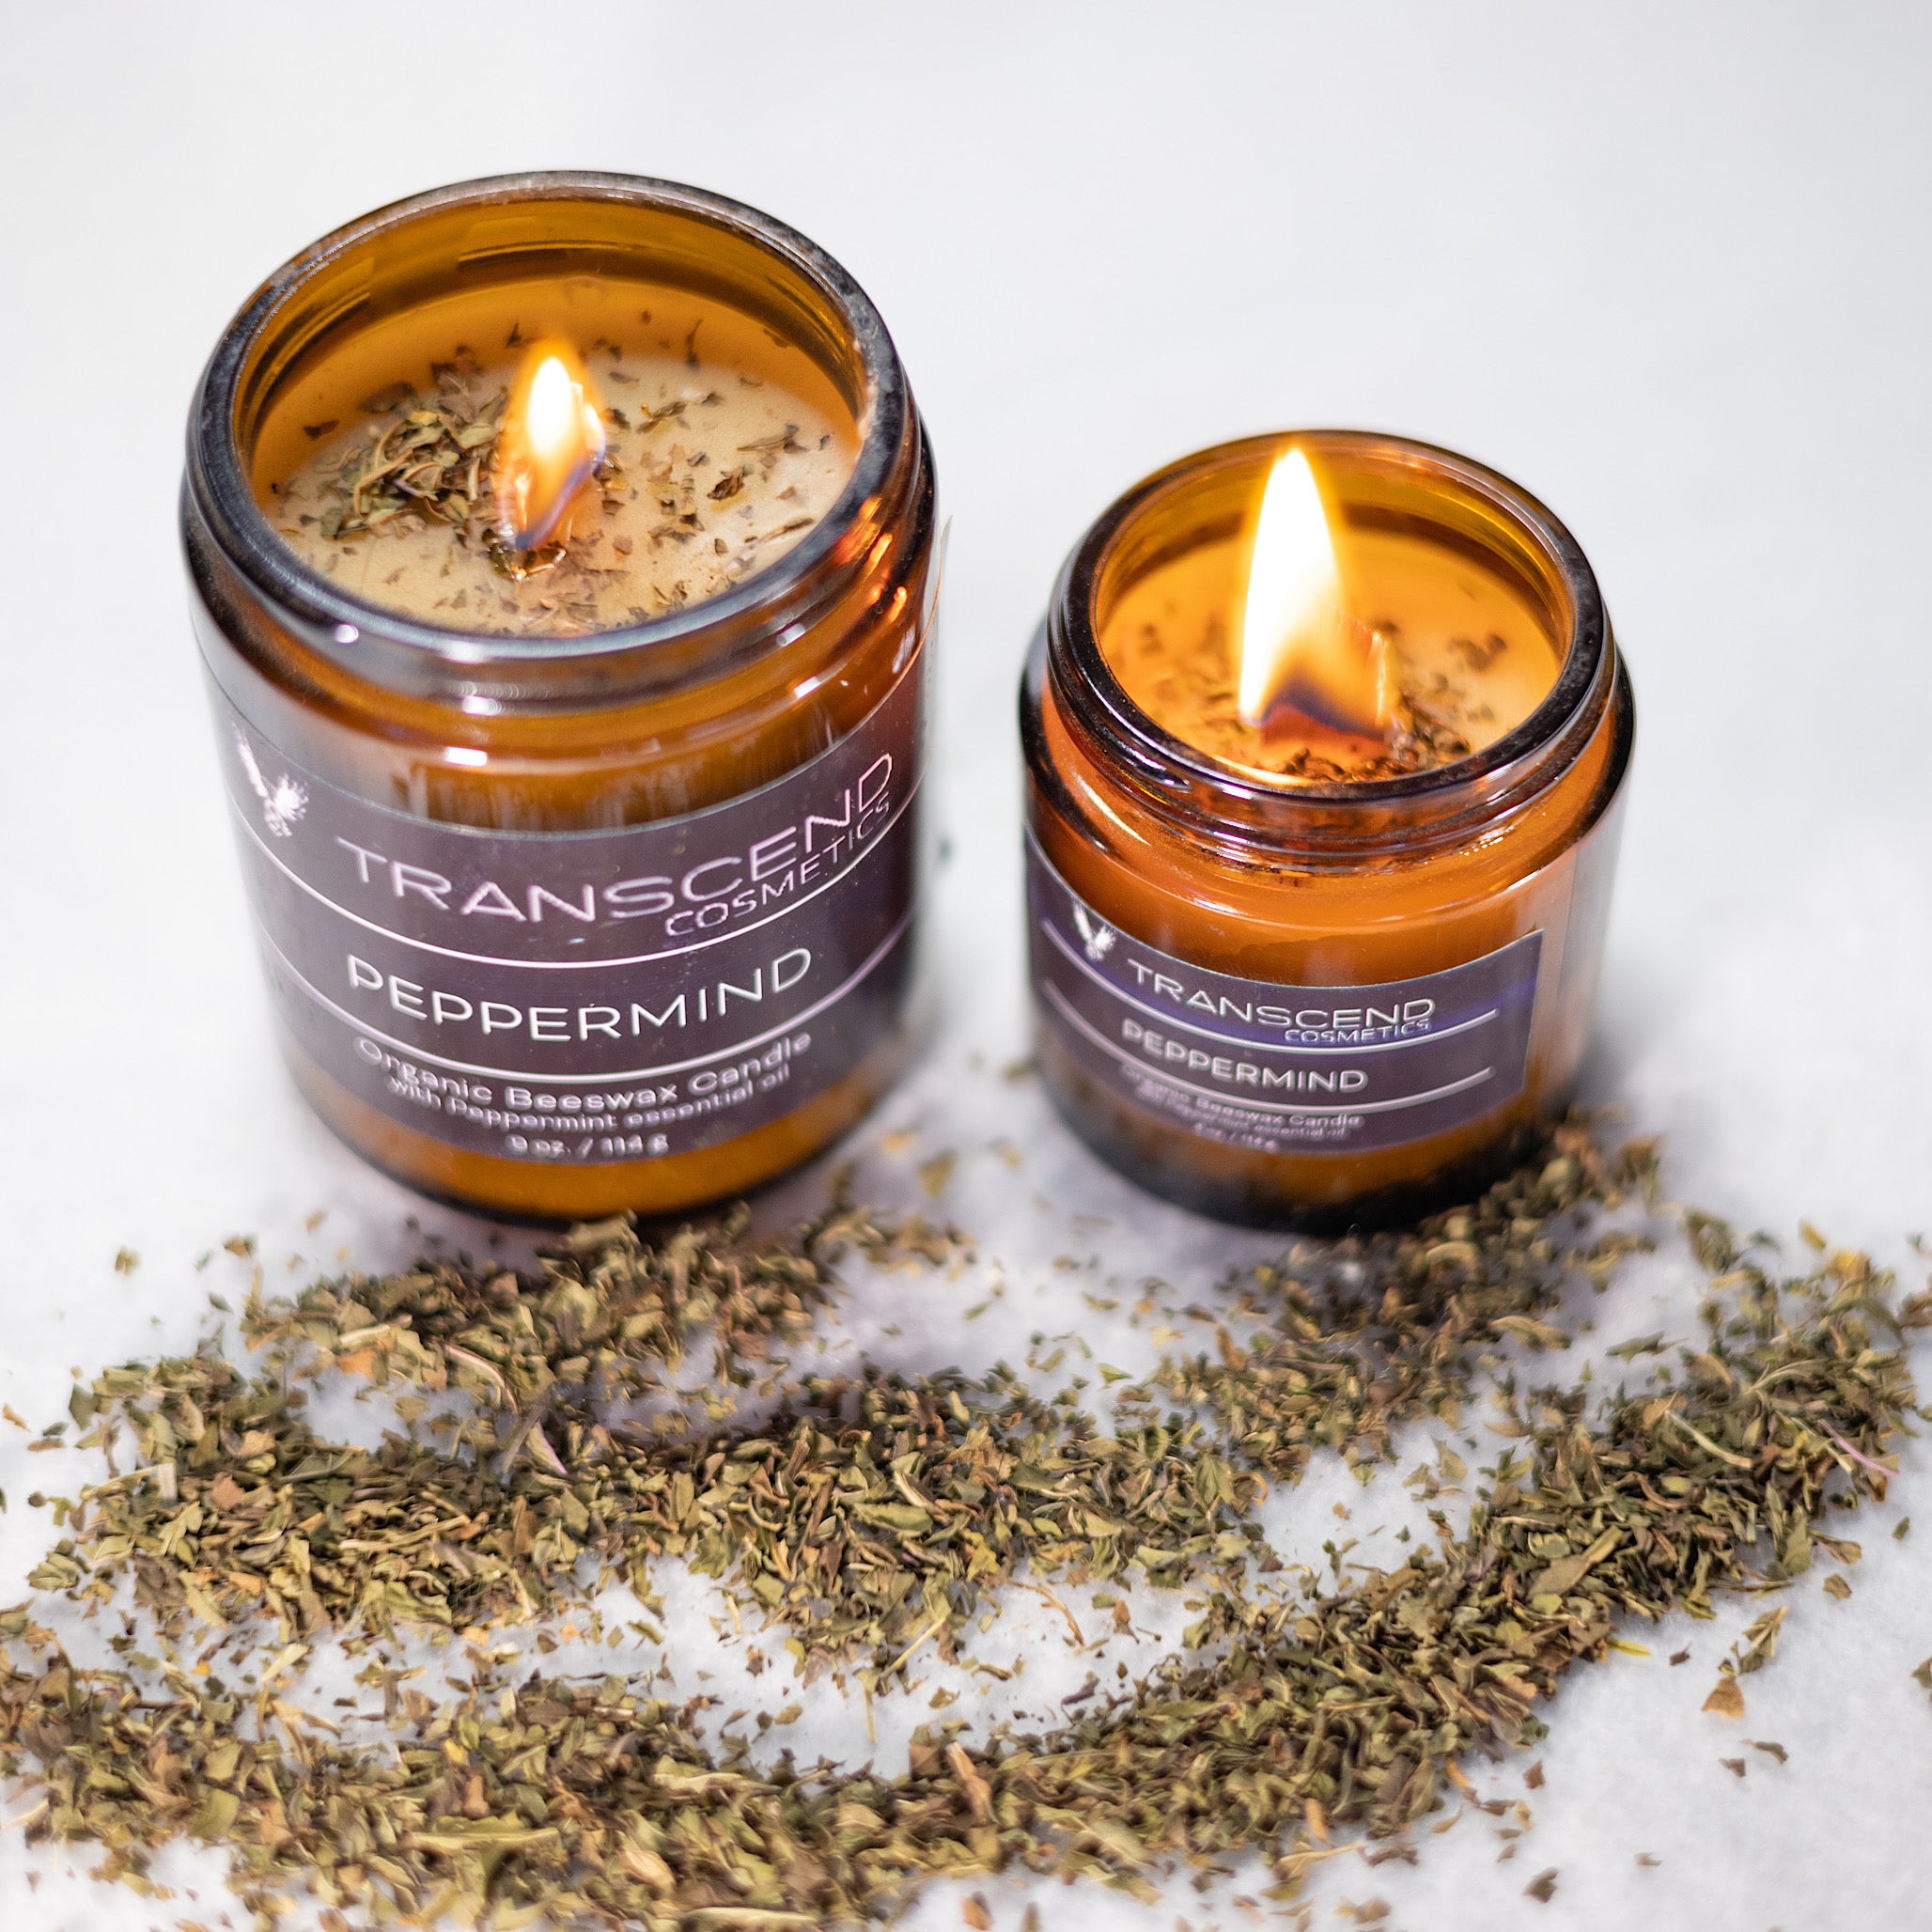 Lavitate Organic Beeswax Candle – Transcend Cosmetics